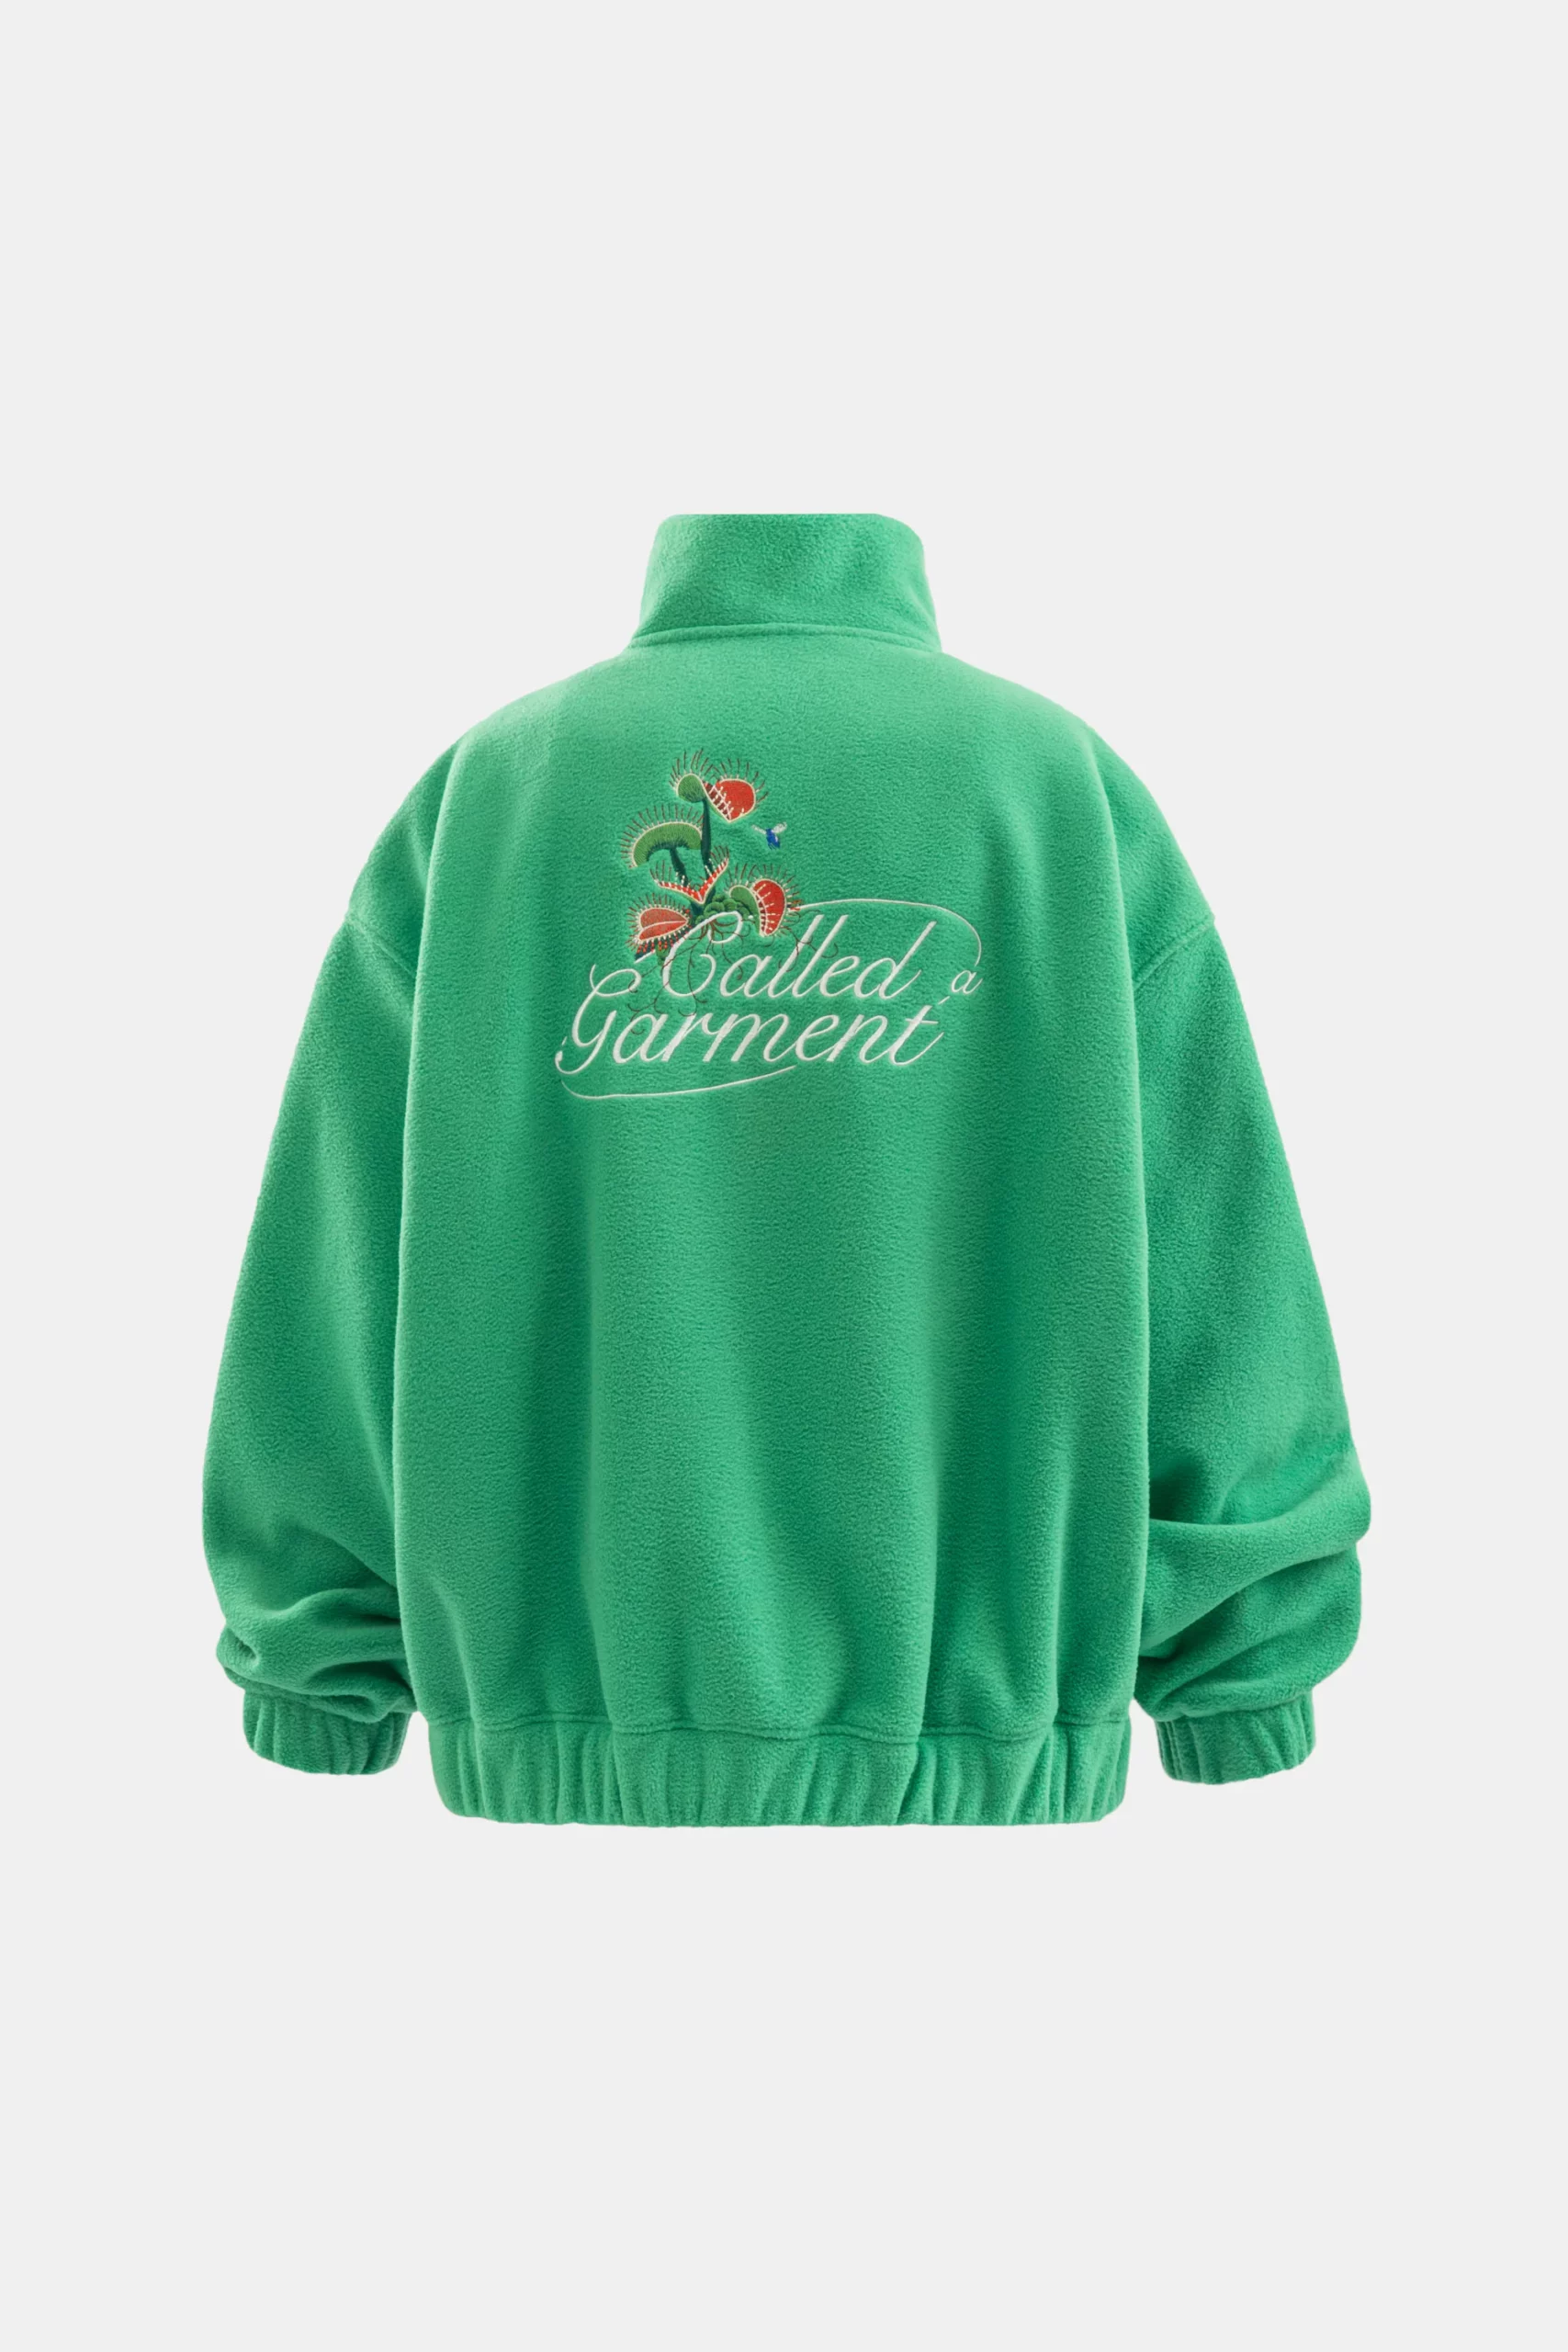 tolstovka called a garment zip fleece logo green 2